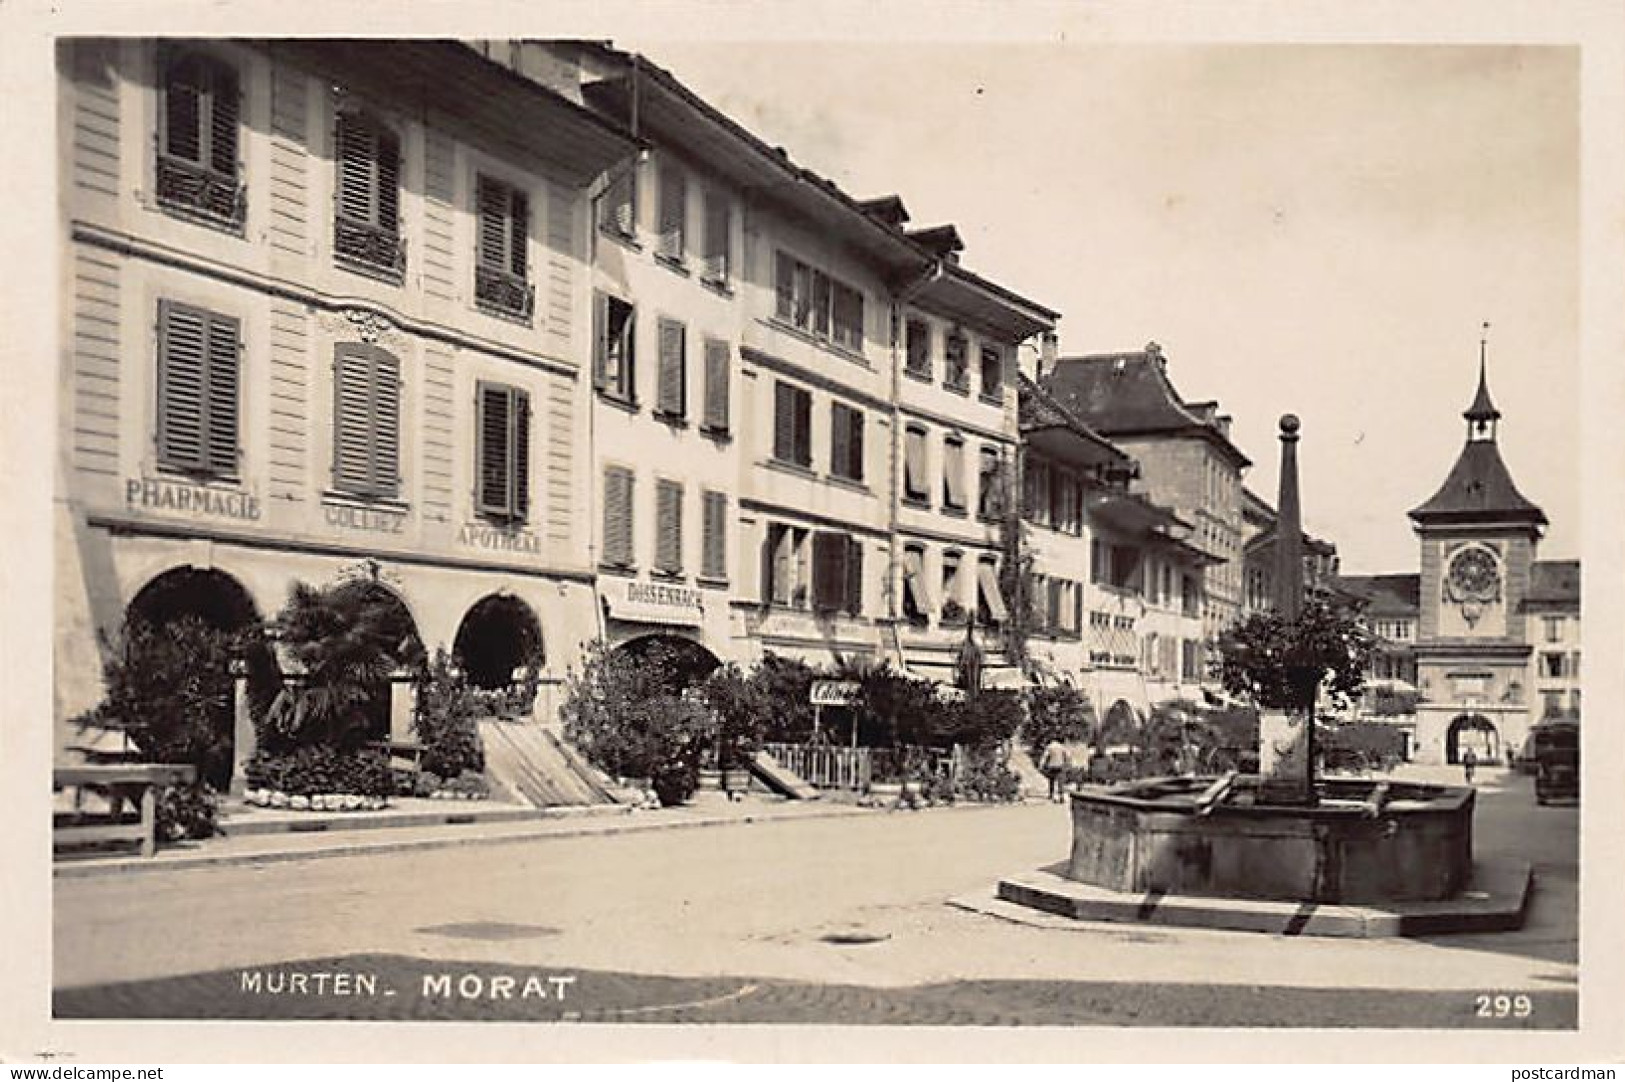 MURTEN MORAT (FR) Pharmacie Colliez, Place Principale - Ed. C.P.N. 299 - Murten